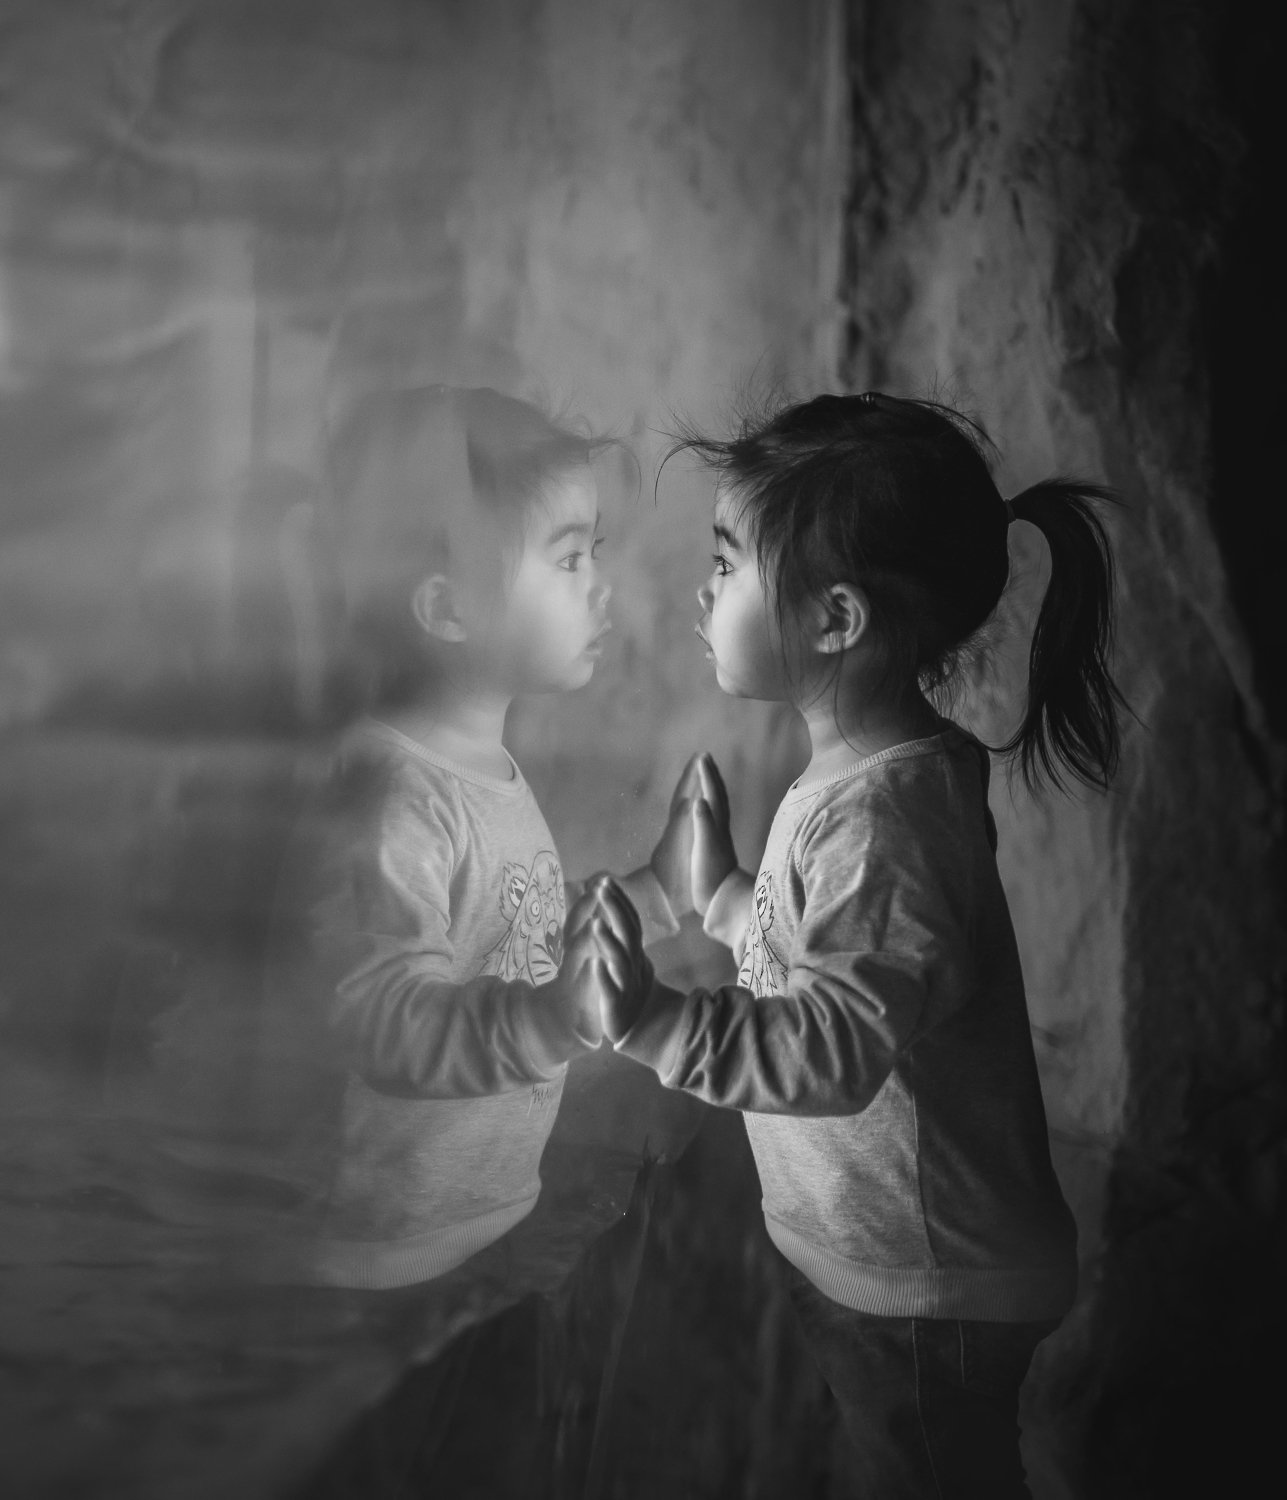 mirror, kid, bw, reflection, face, mood, childhood, Derek Zhang